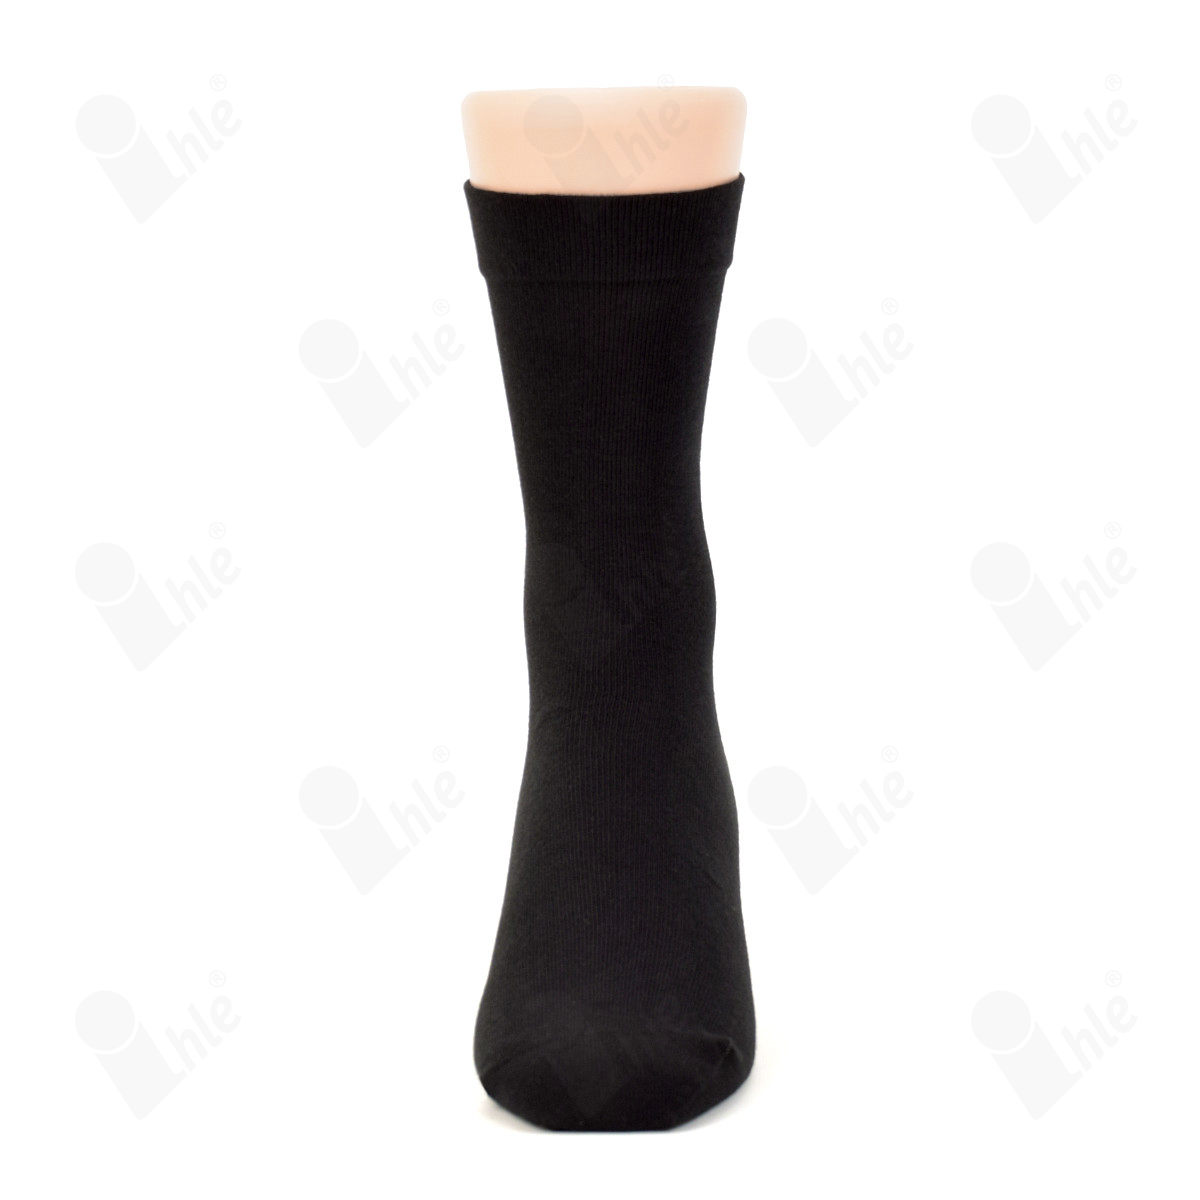 Ihle Socke klassisch schwarz Gr. 35-38